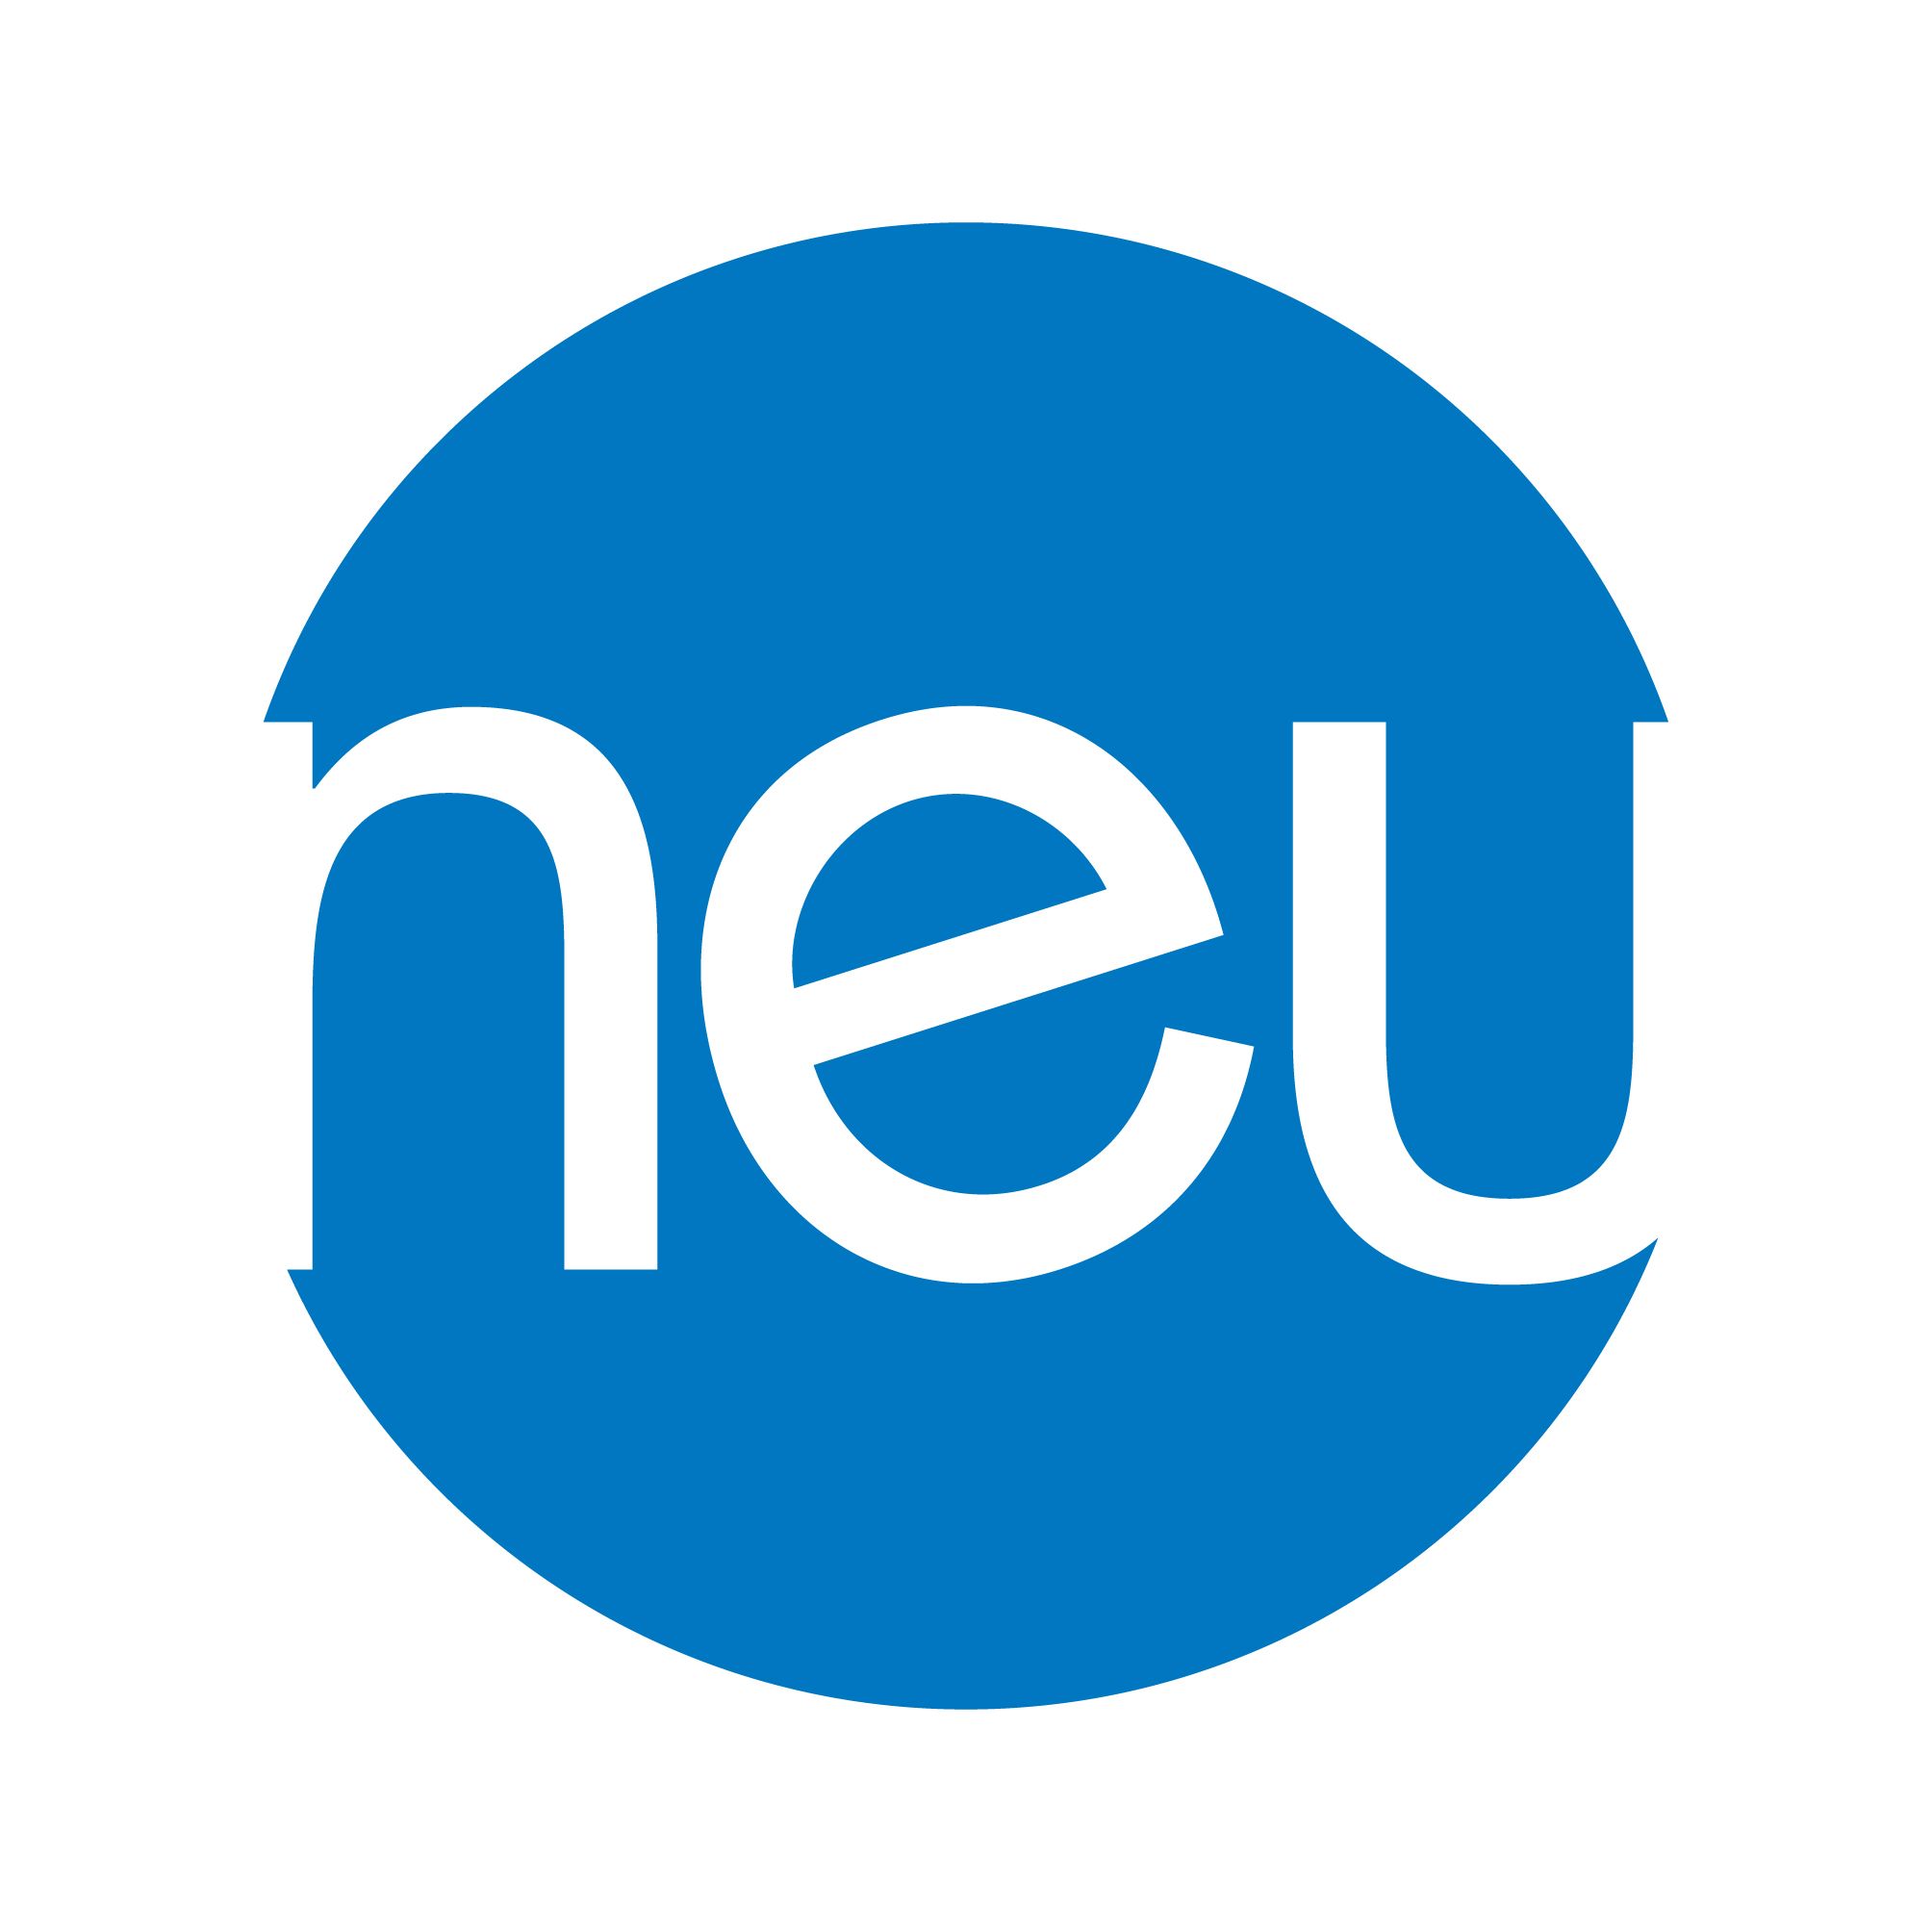 Neu Industries Pte Ltd